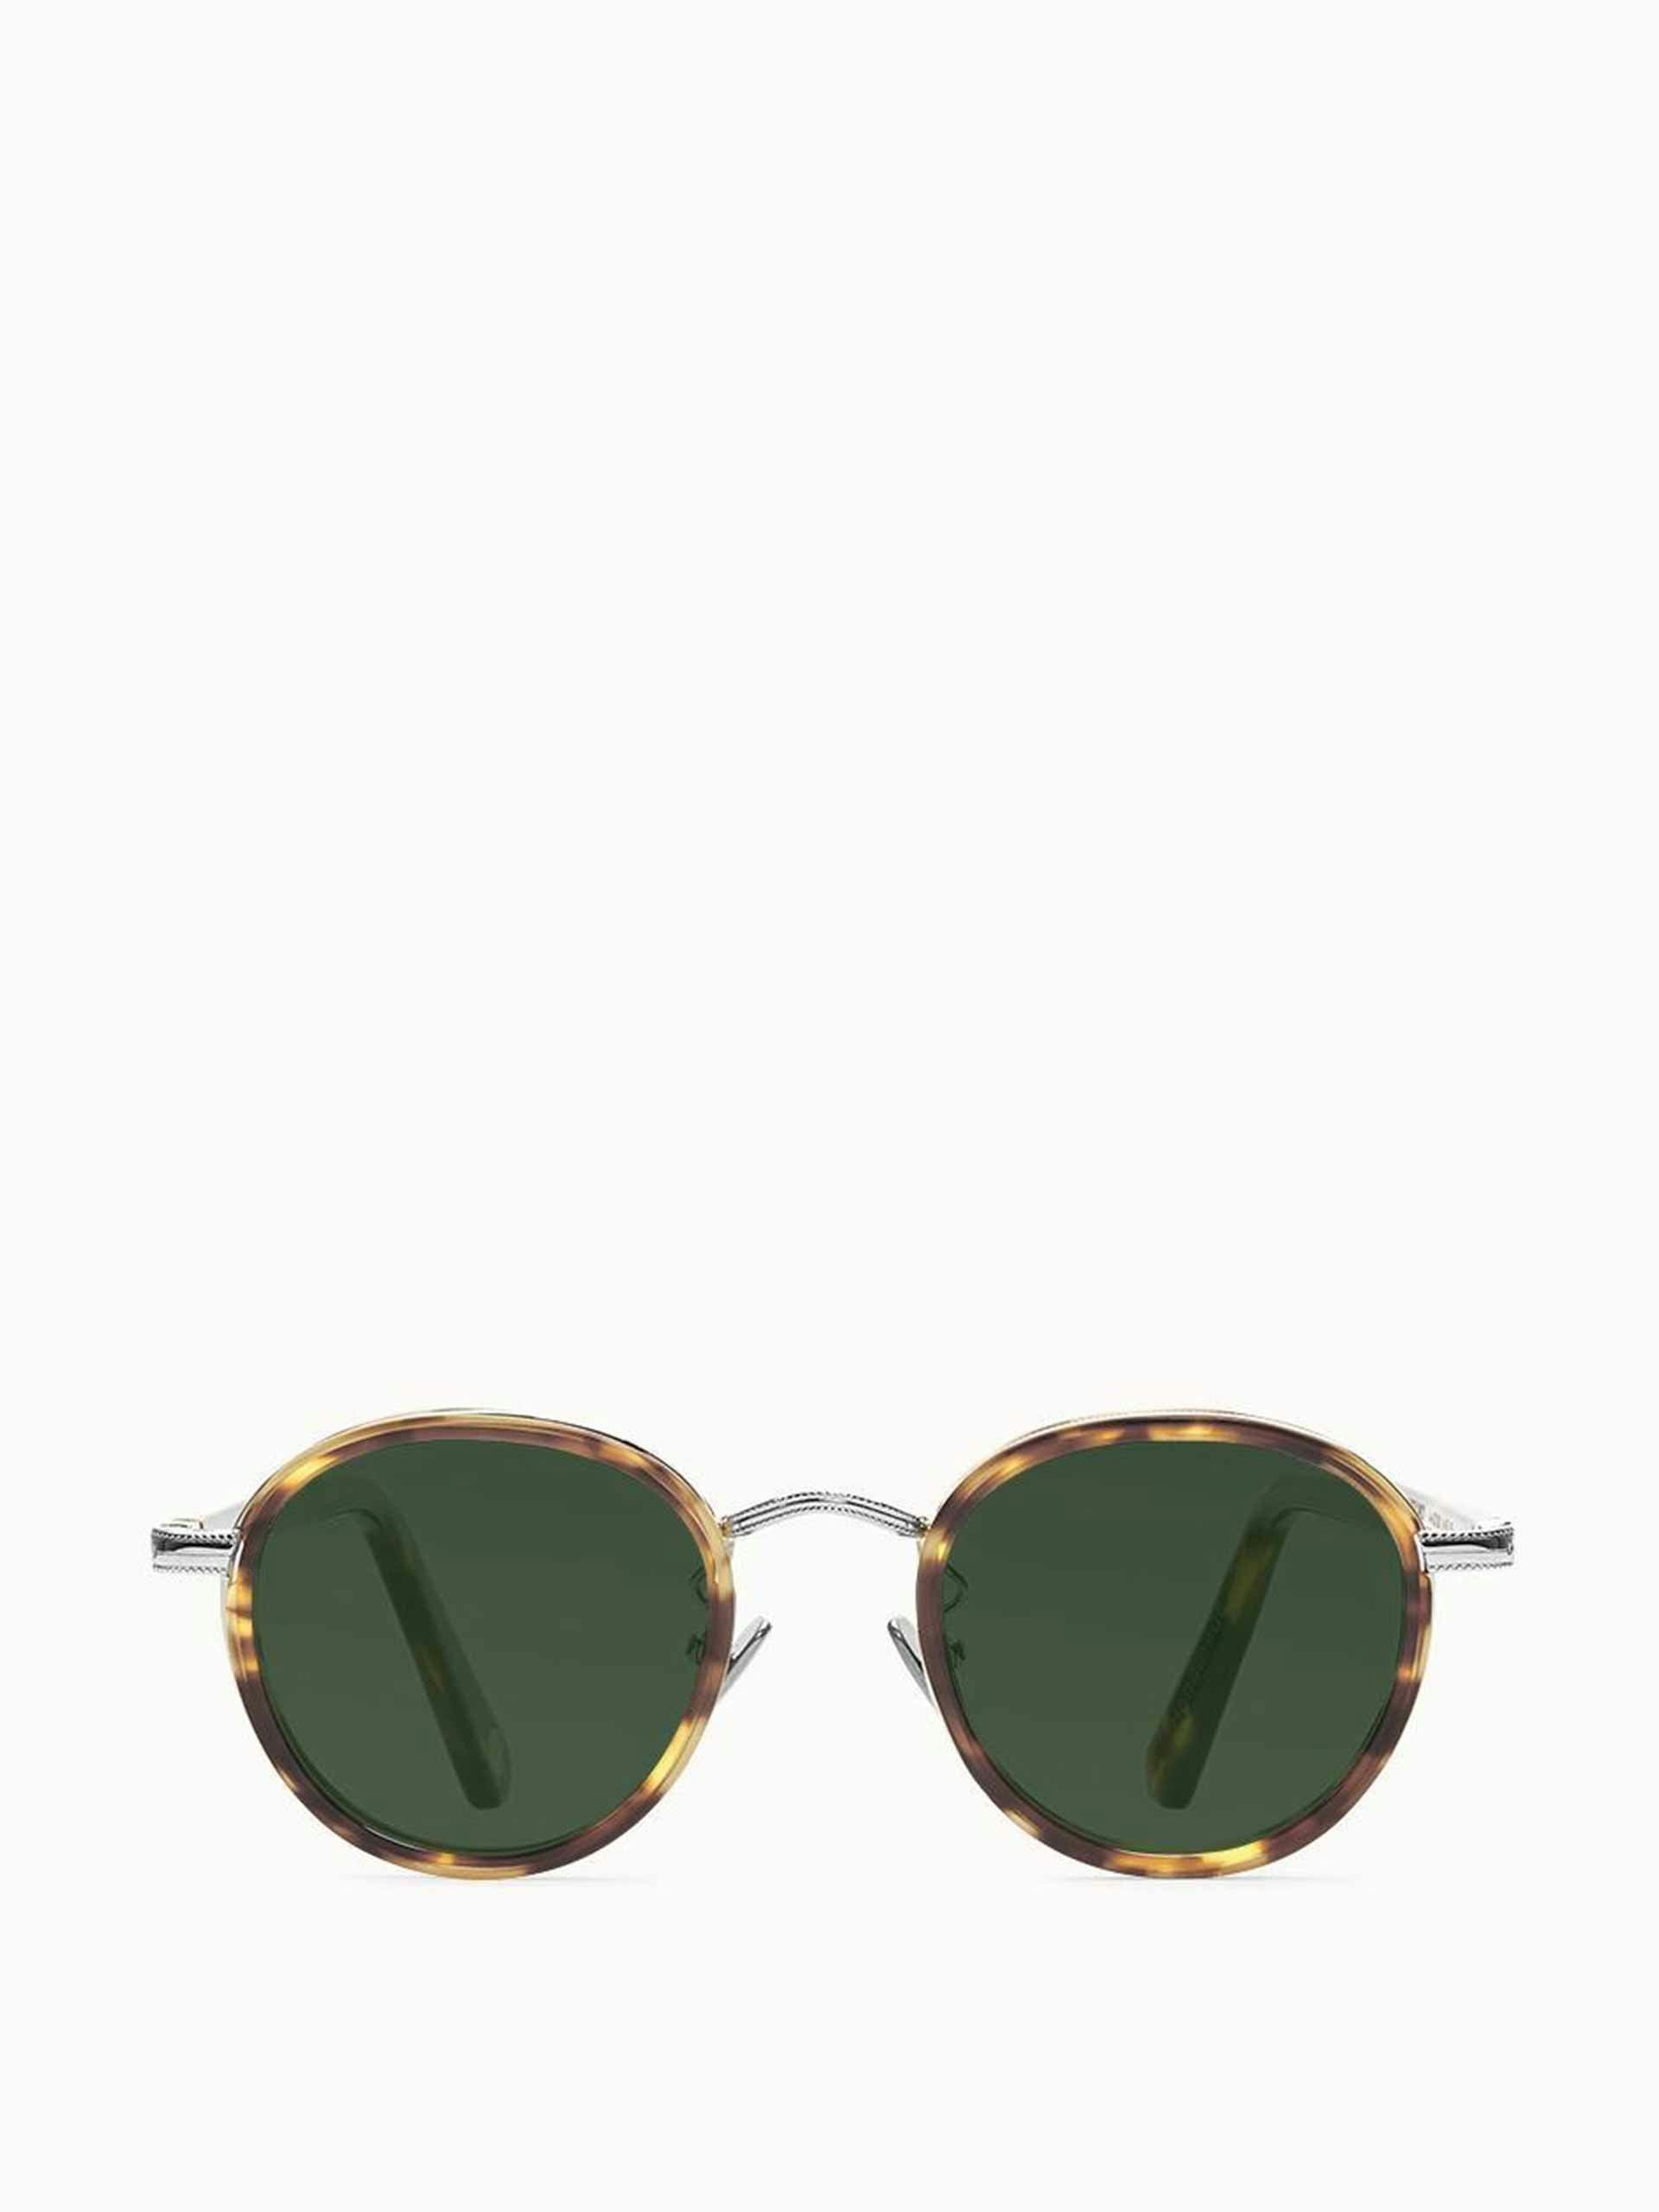 Round acetate frame sunglasses